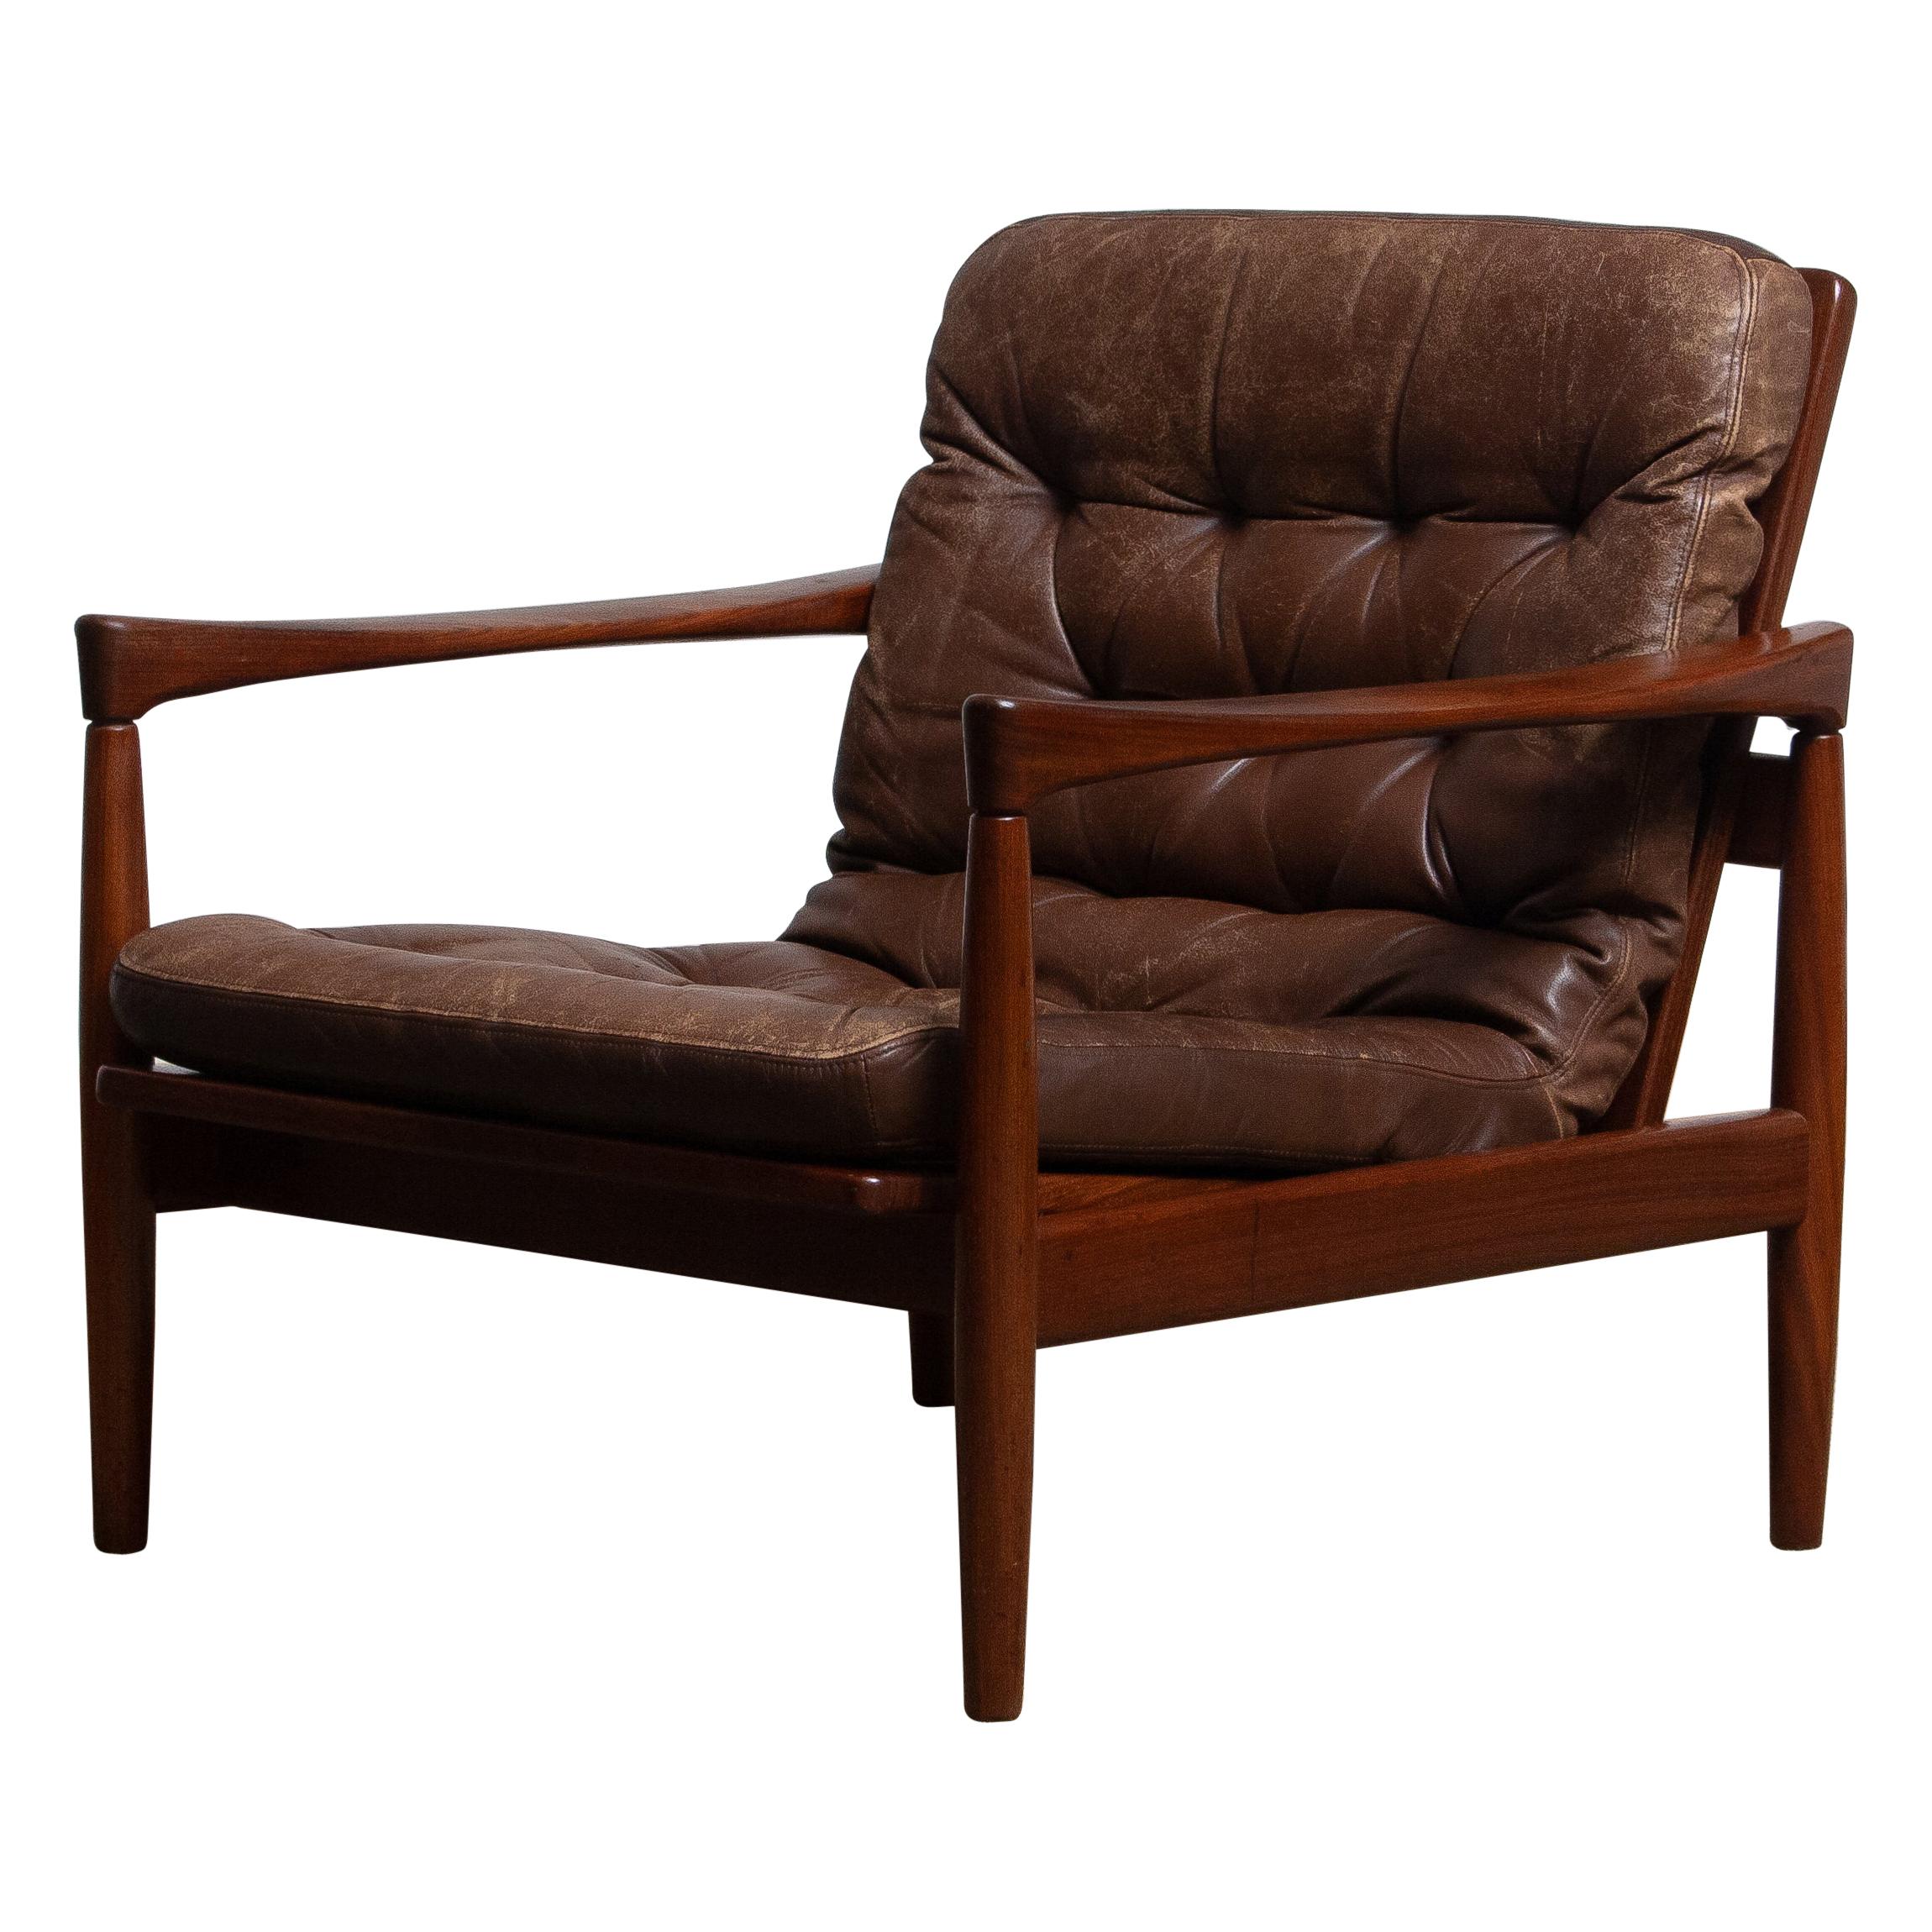 1960s, Teak and Brown Leather Lounge Chair by Erik Wörtz for Bröderna Anderssons In Good Condition In Silvolde, Gelderland